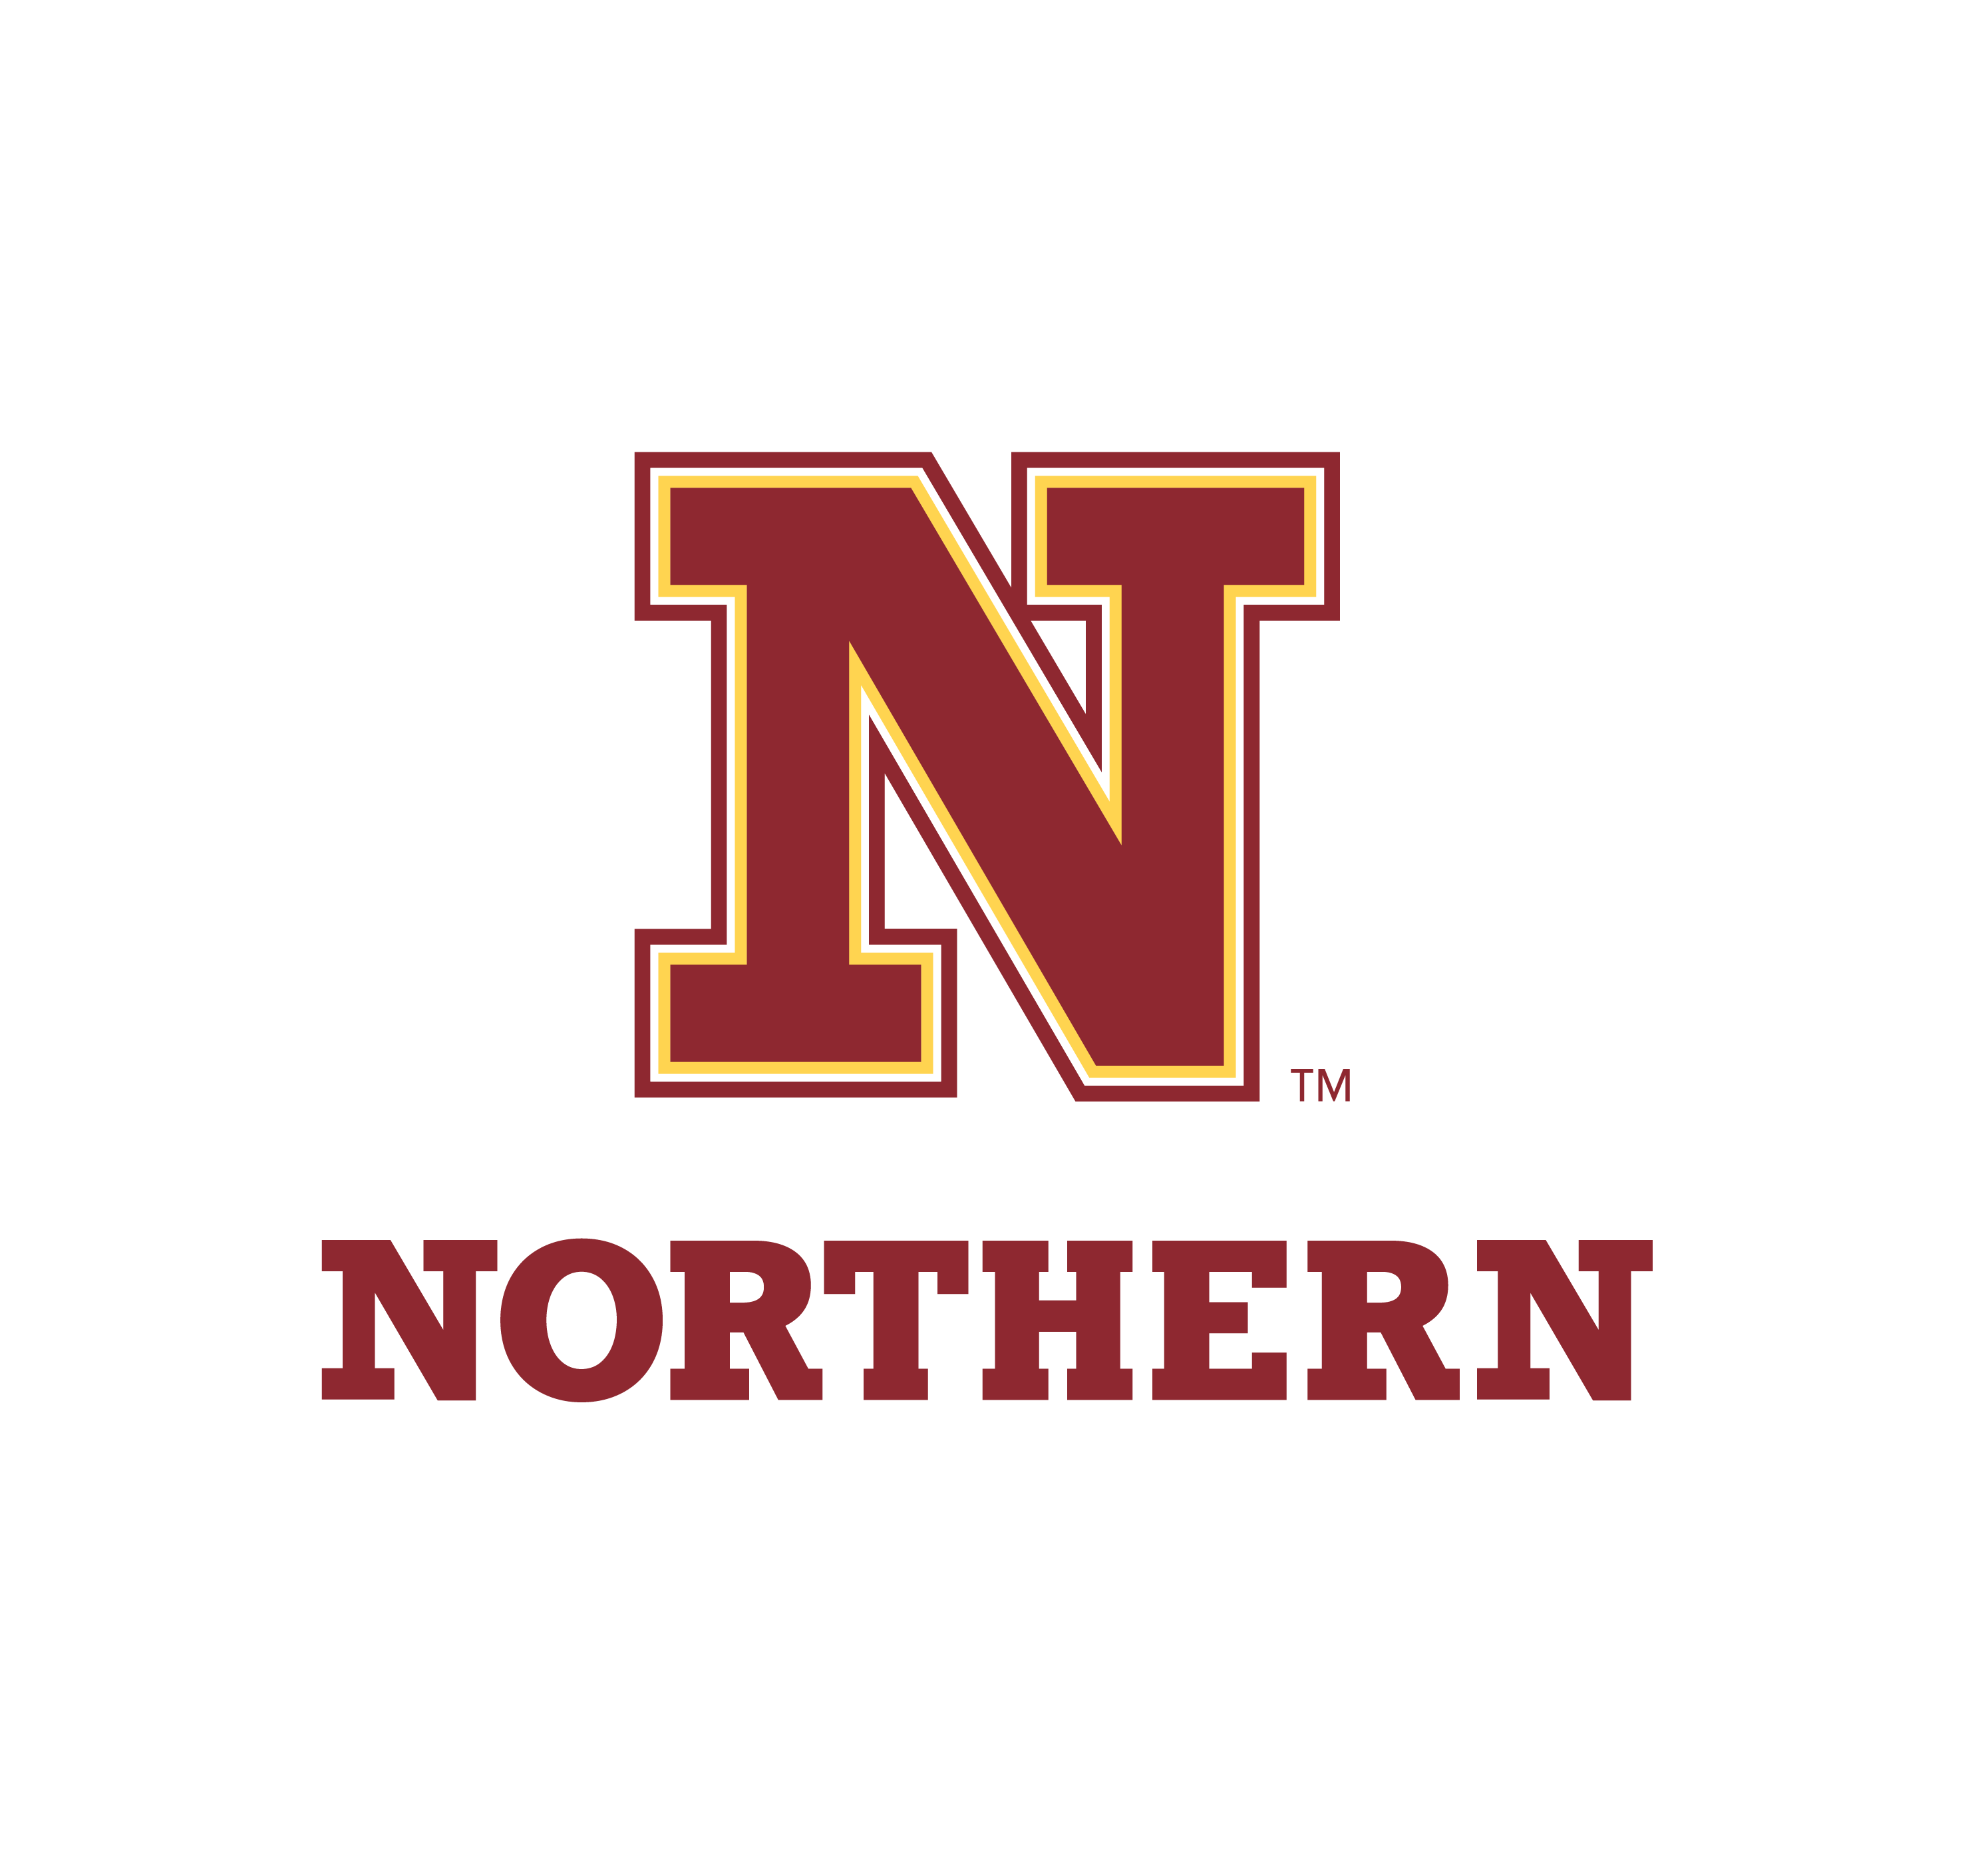 northern state university school logo